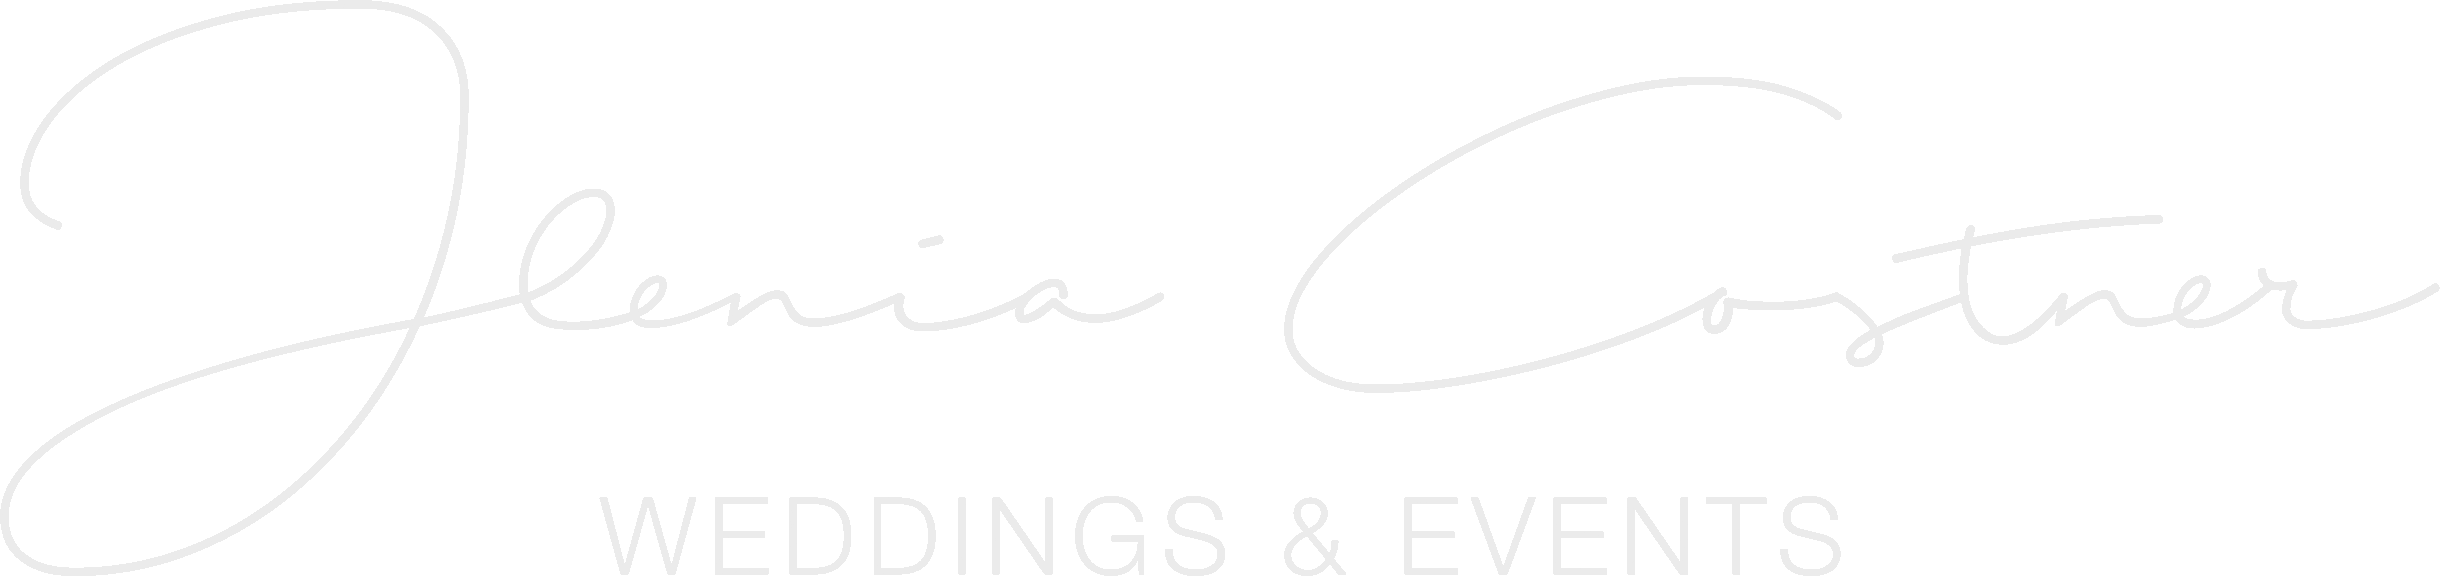 Logo Jlenia Costner Weddings Events graustufen copy